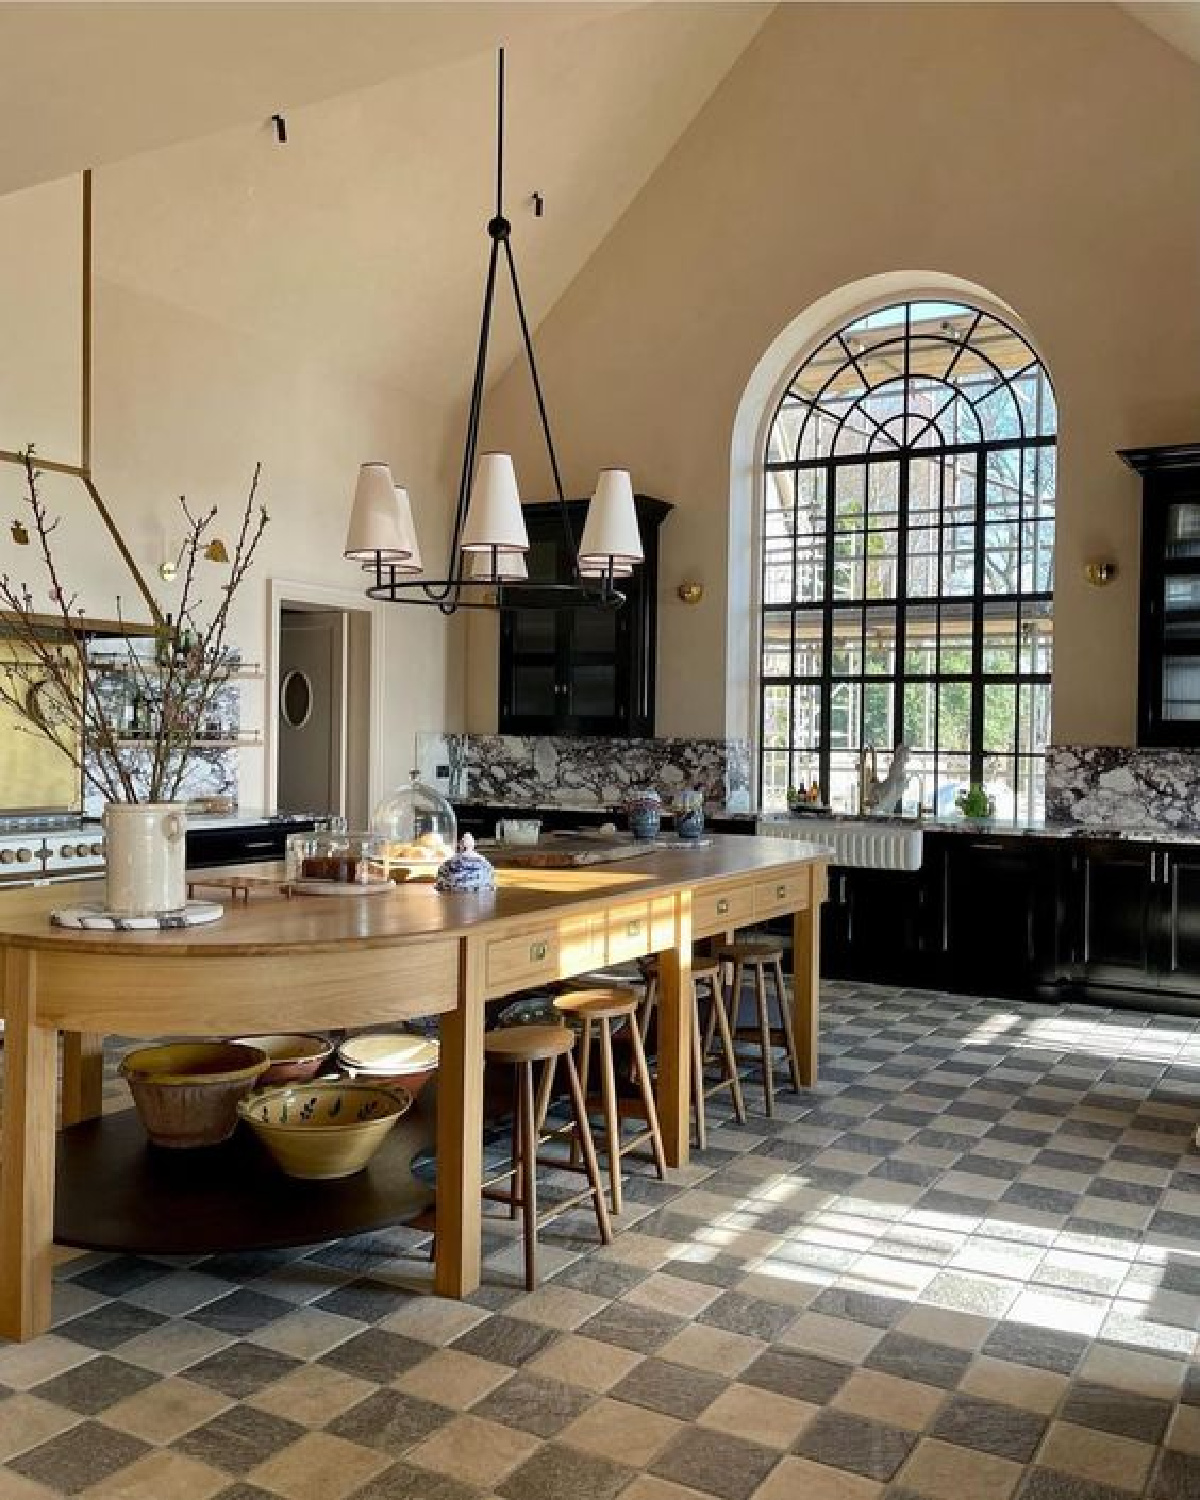 BarlowandBarlow designed European country kitchen with checkered floor and arched window. #europeankitchen